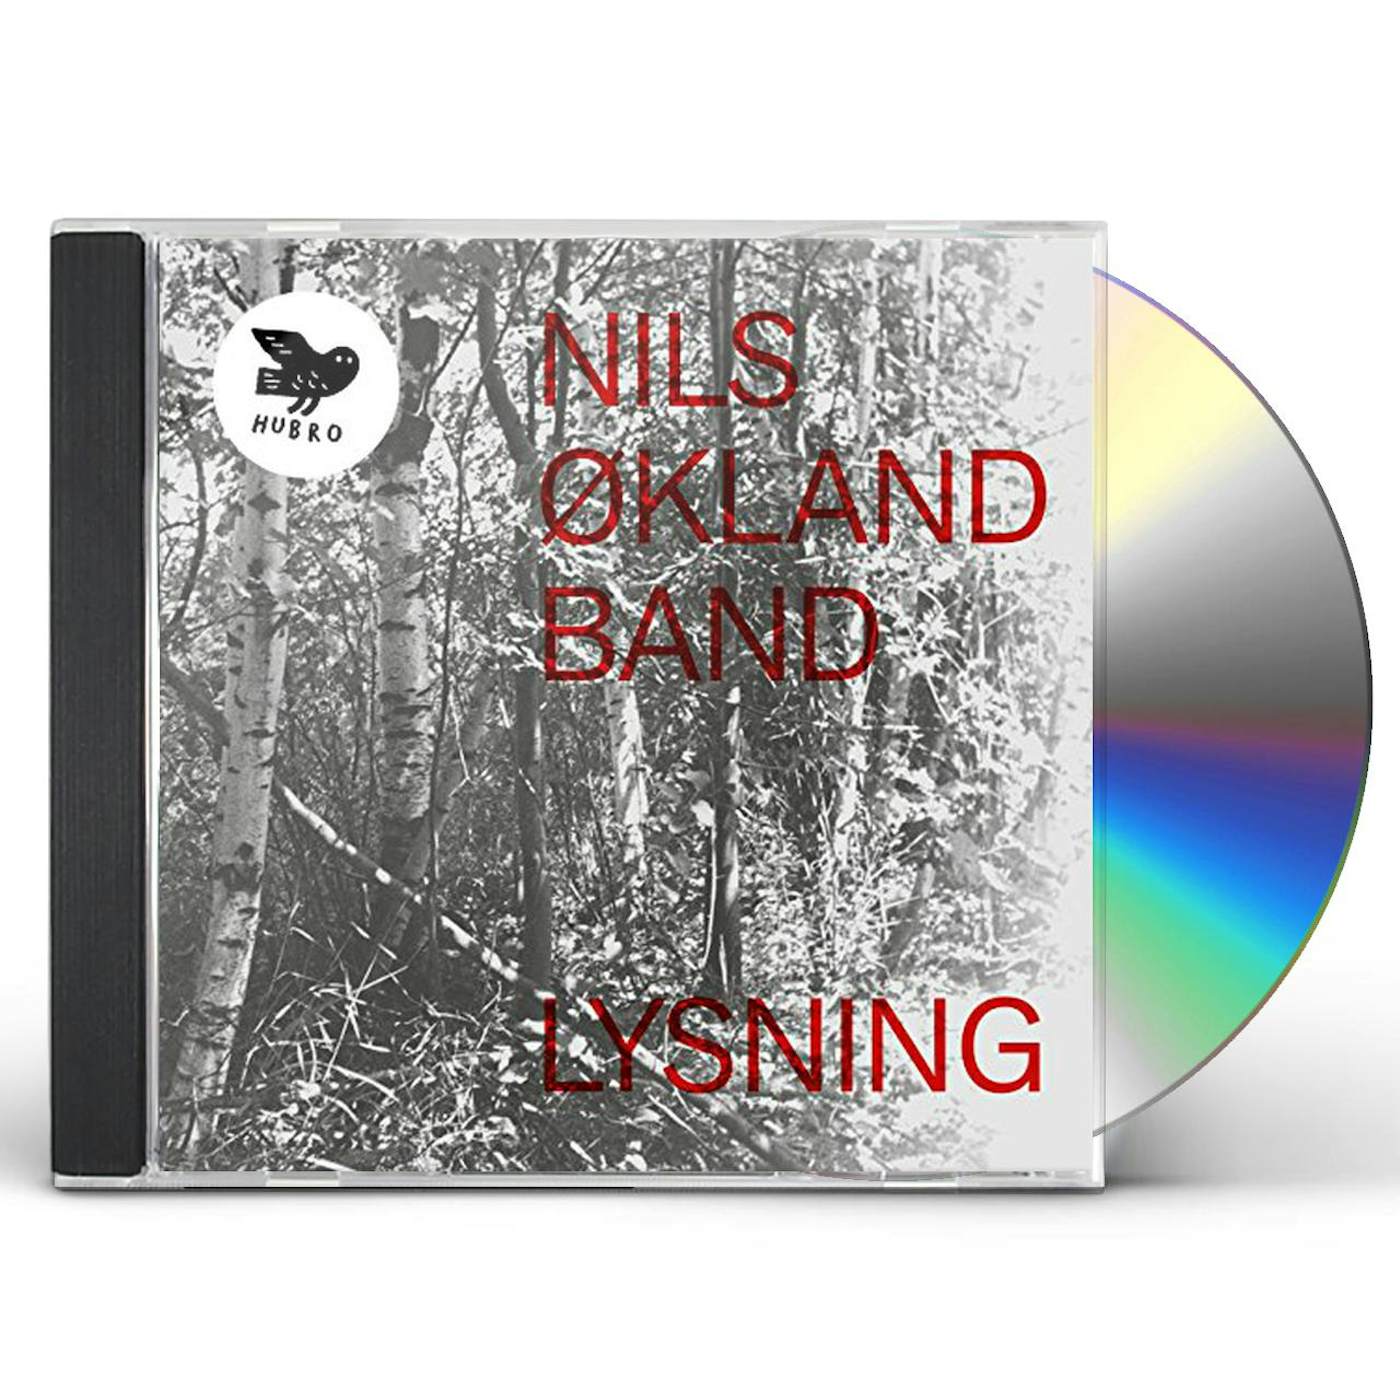 Nils Band Okland LYSNING CD